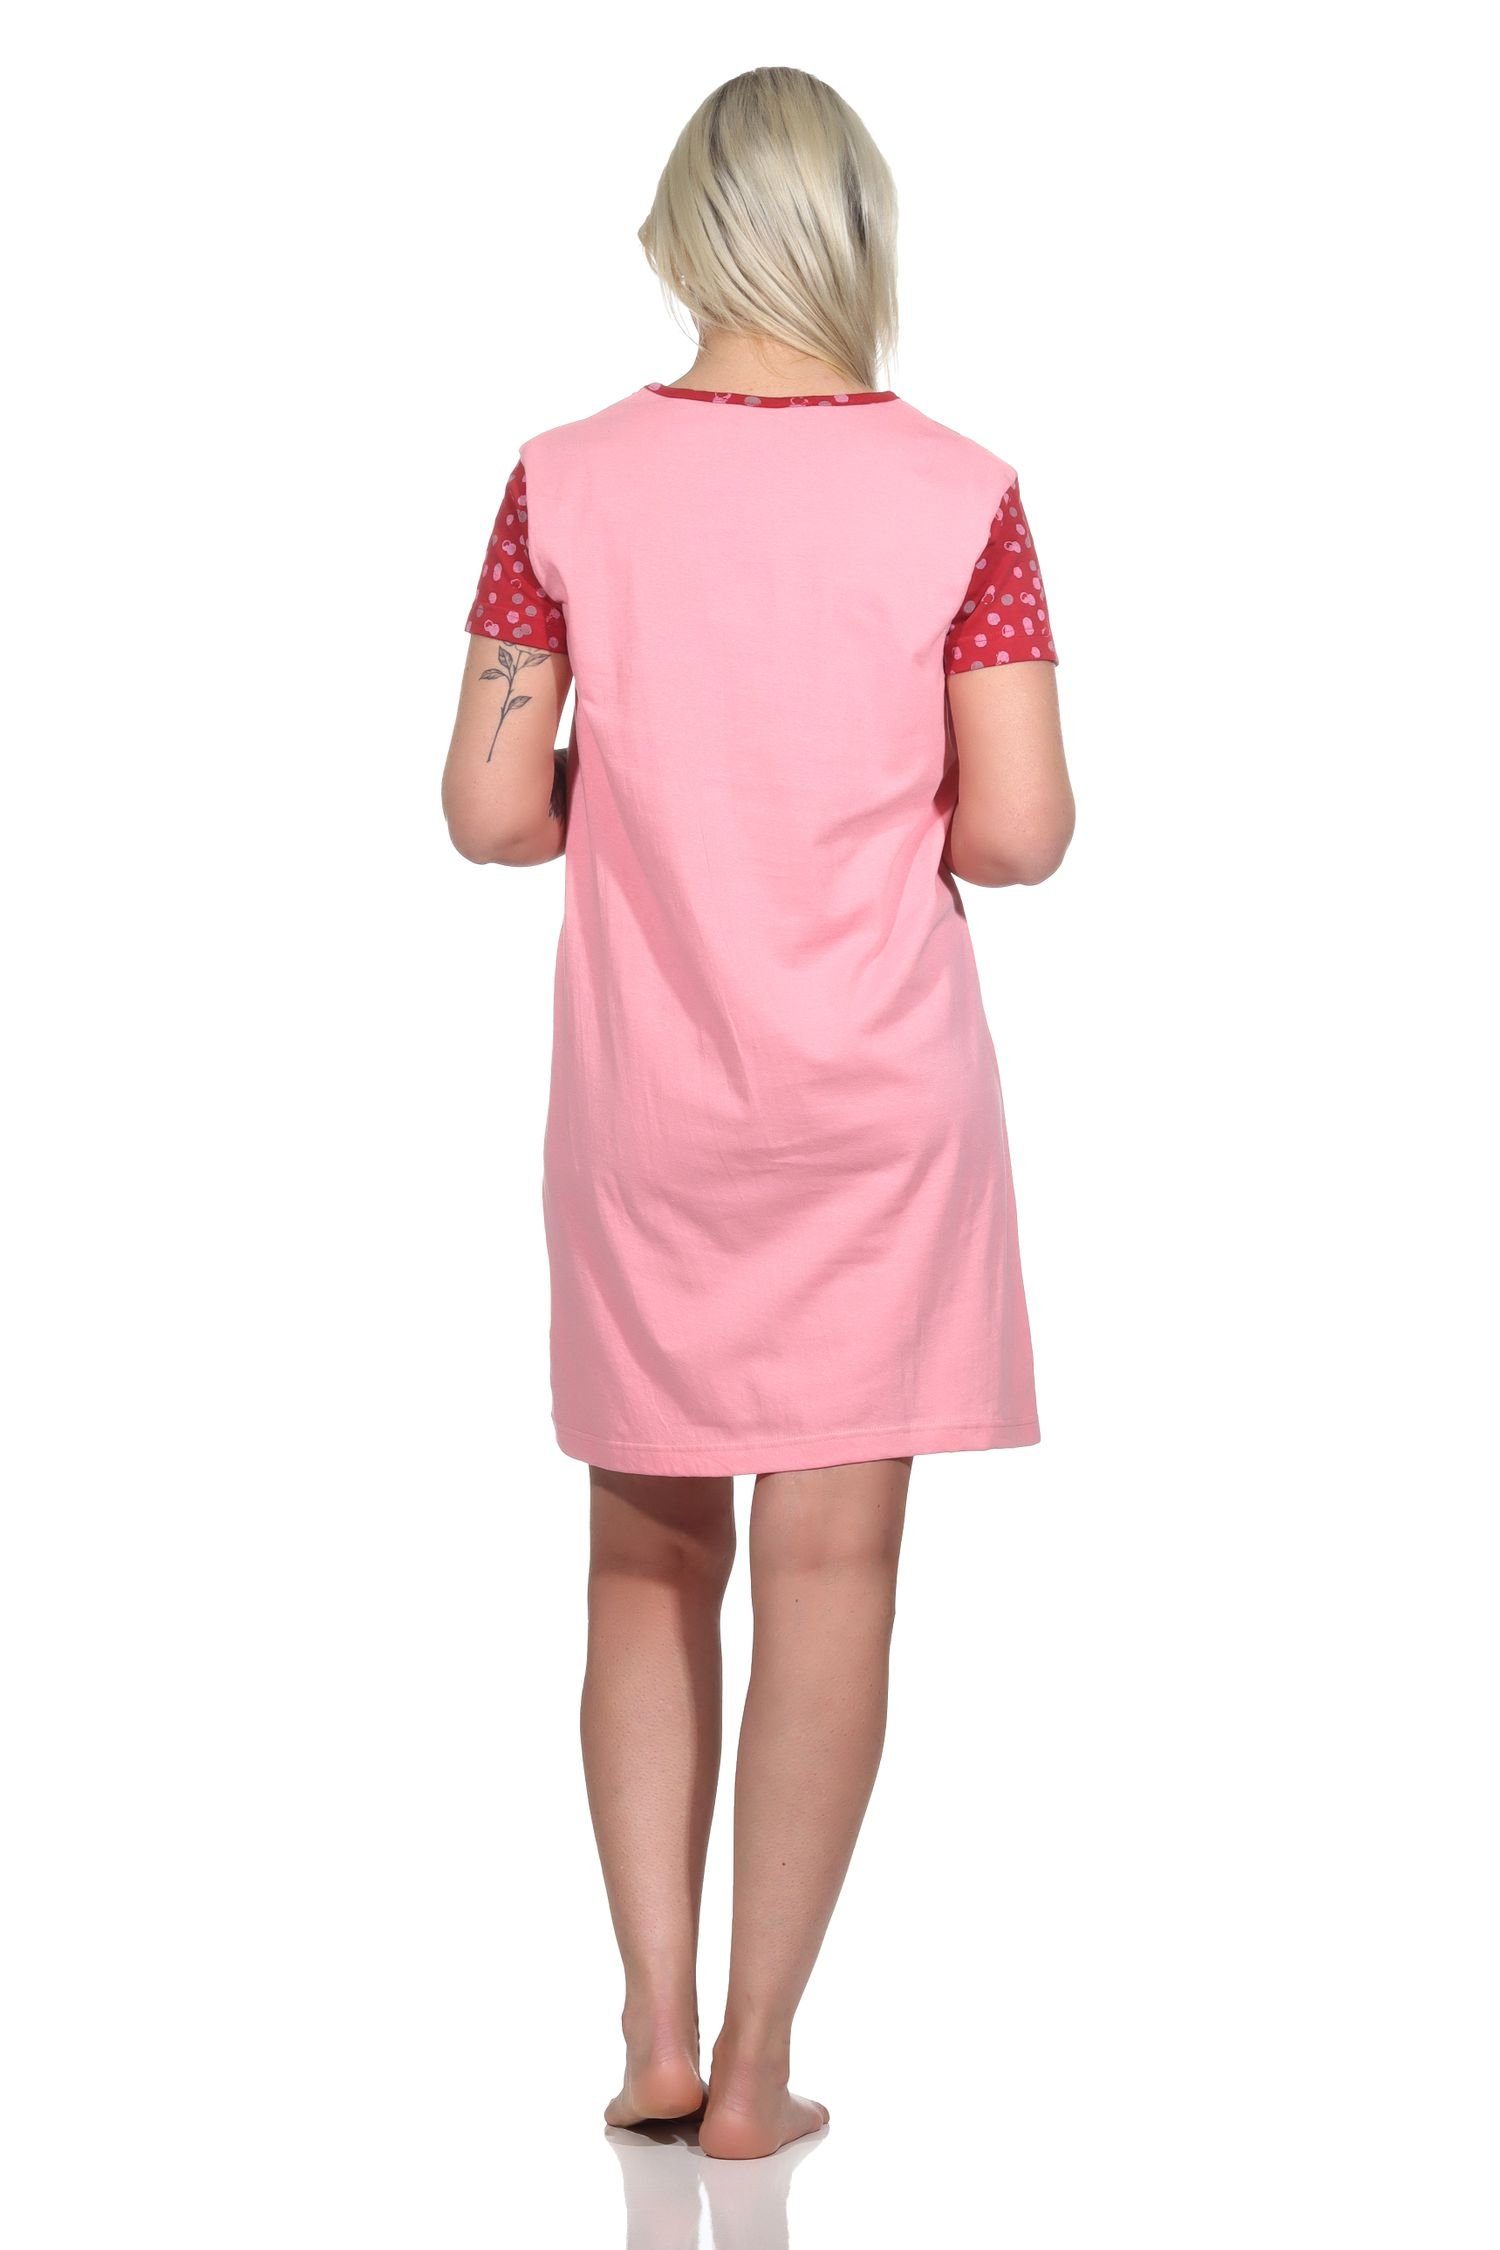 RELAX by Normann Nachthemd Damen Casual - Kurzarm im 10 757 122 Nachthemd Look rosa